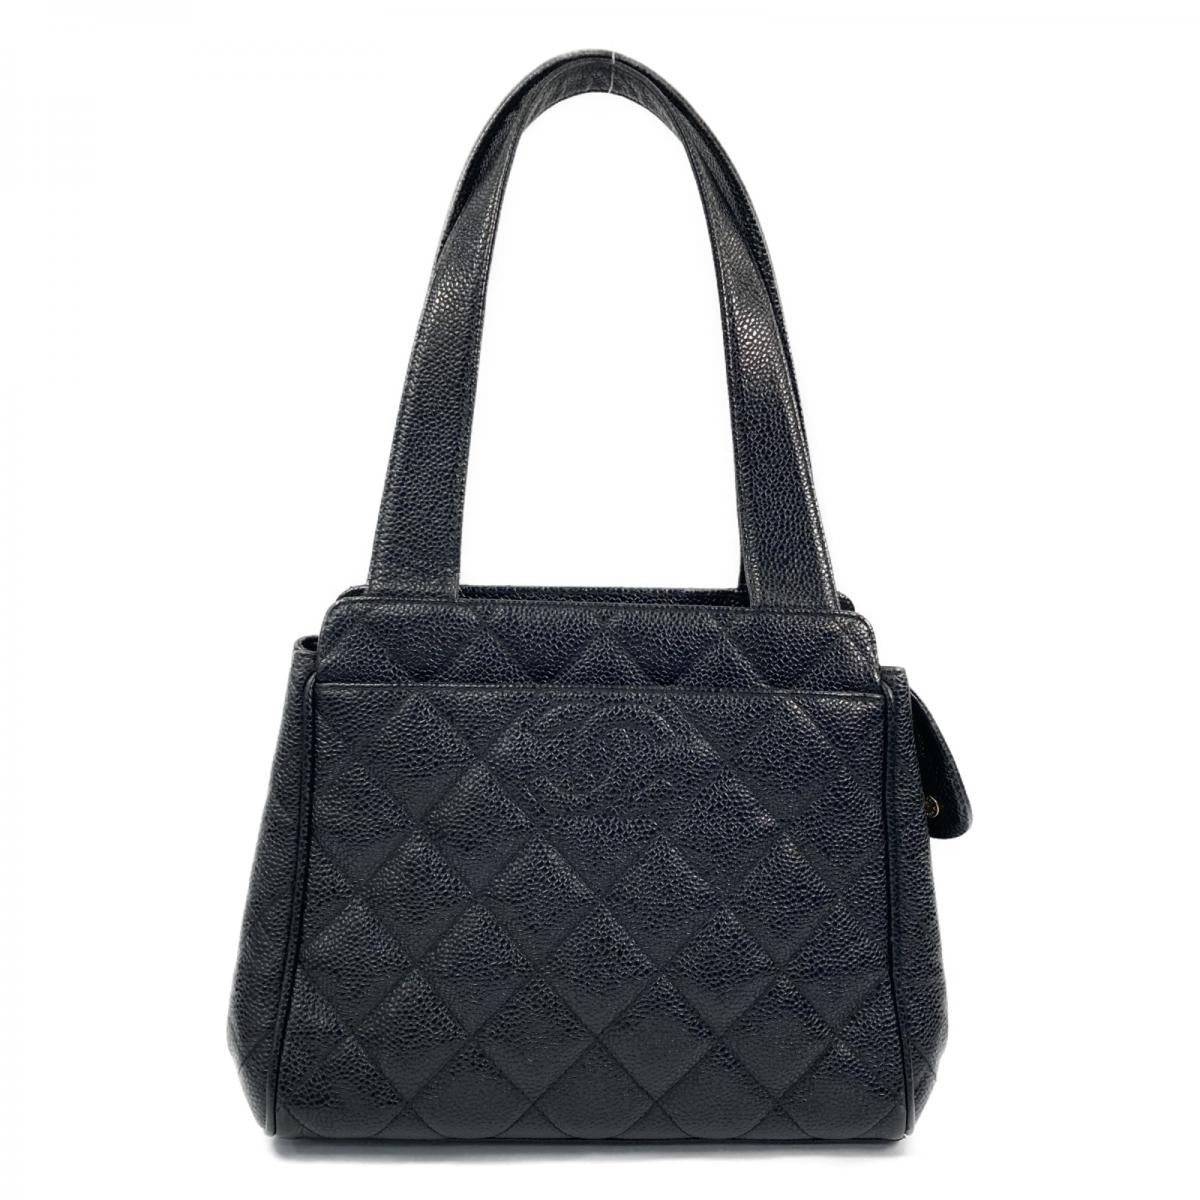 CC Caviar Handbag